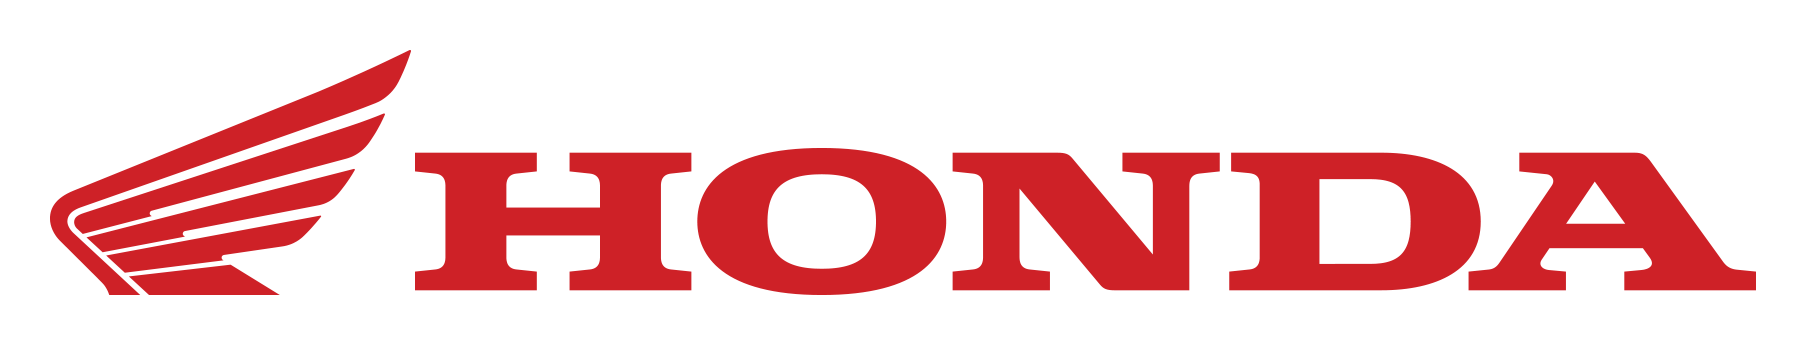 Honda Symbol Transparent Images